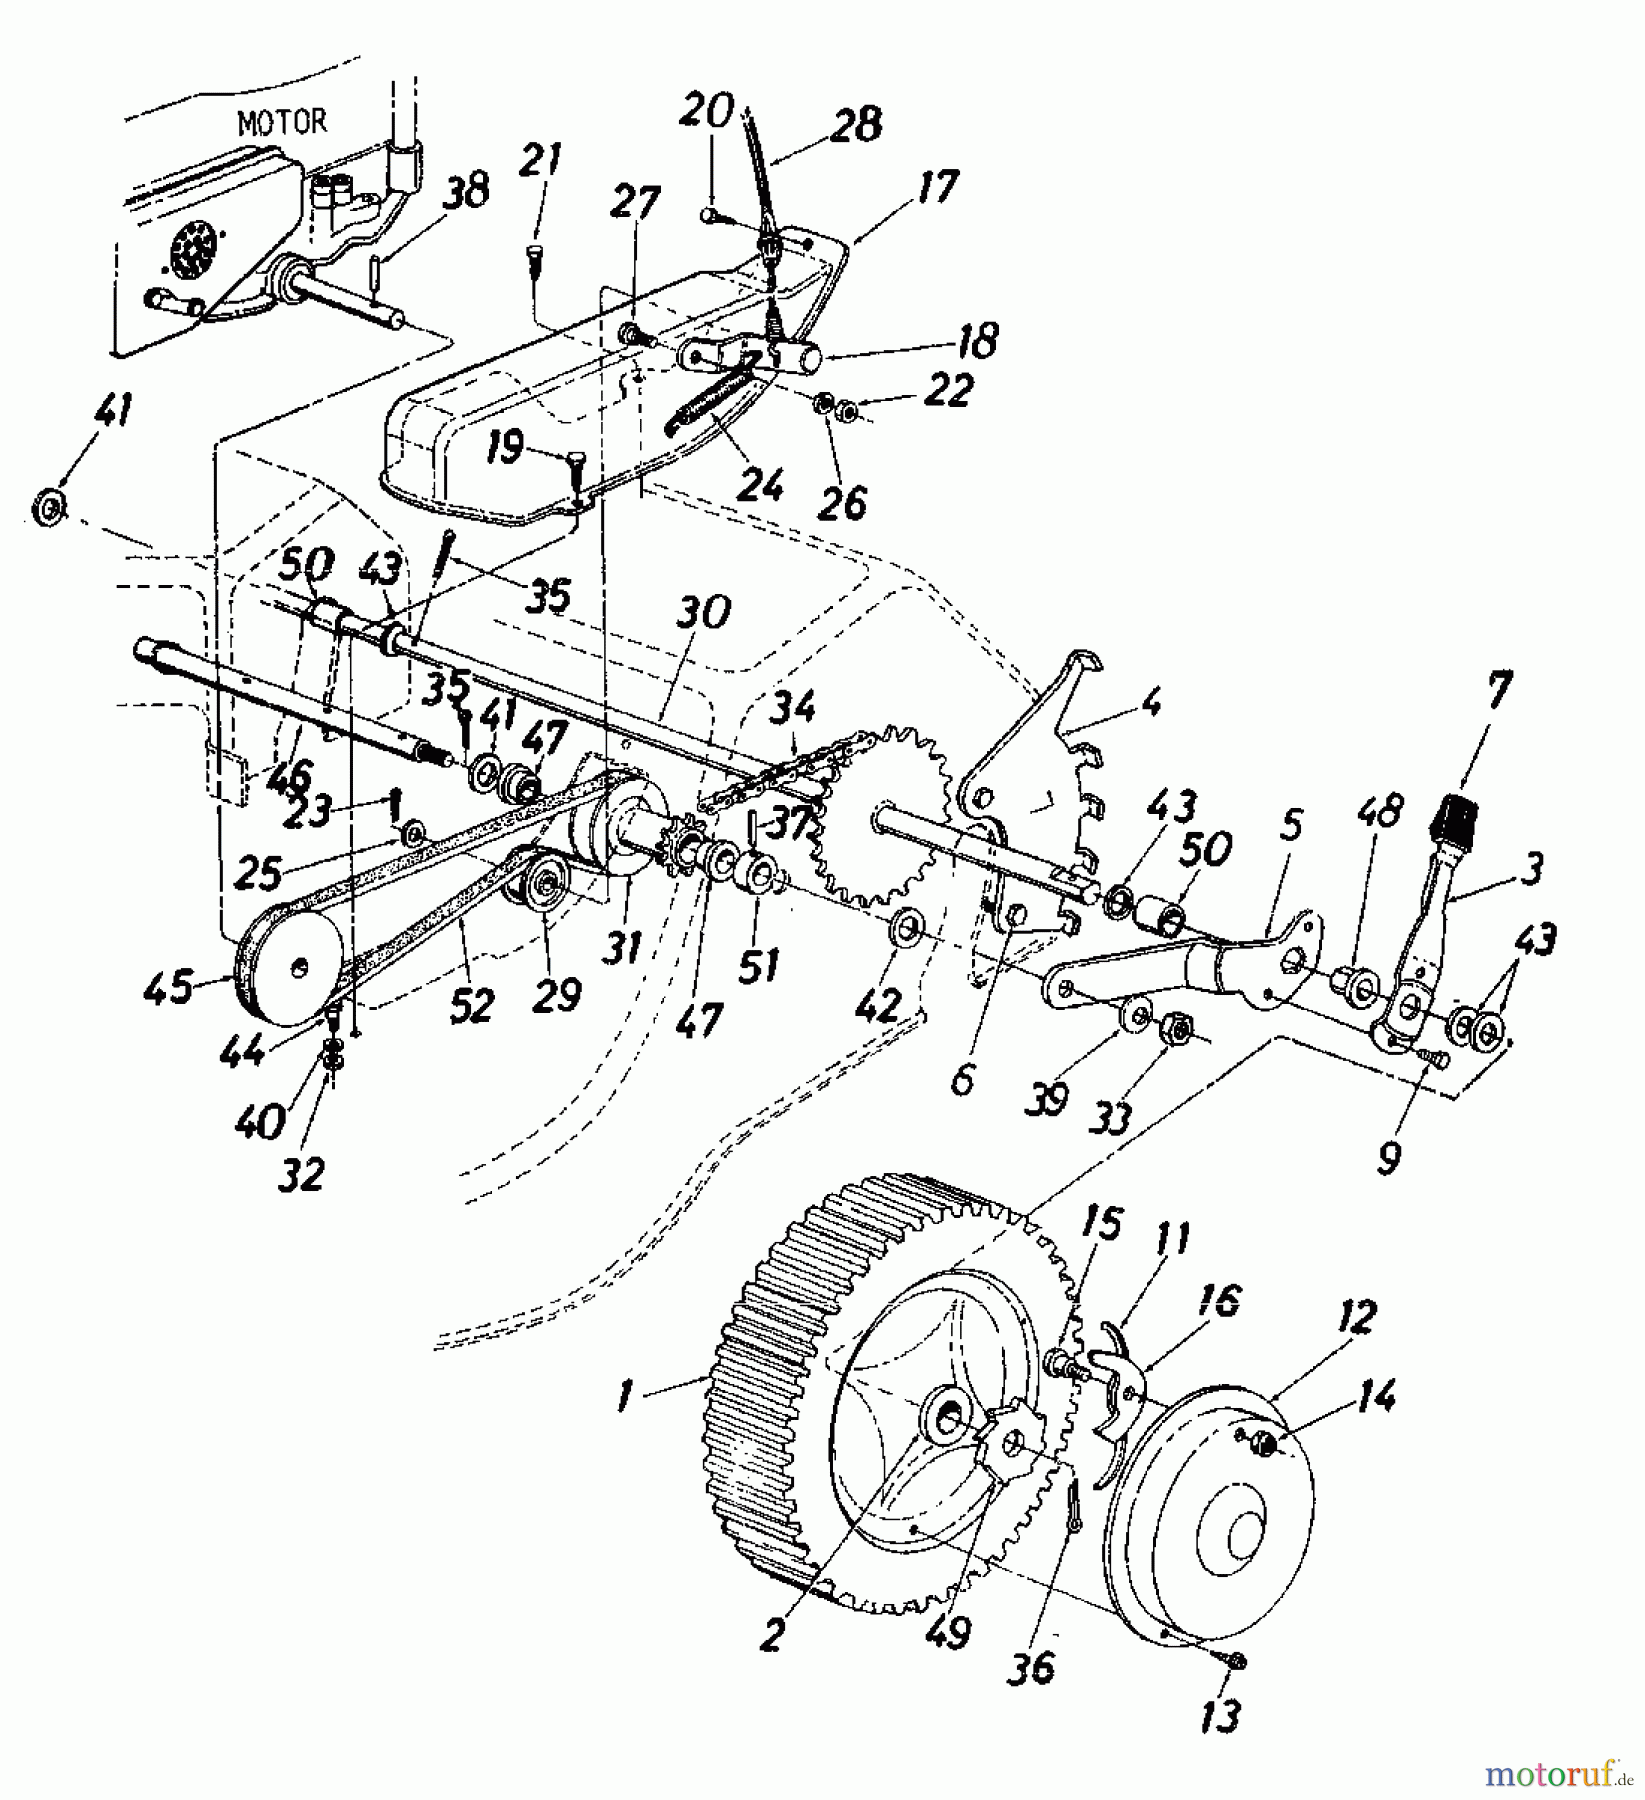  Columbia Petrol mower self propelled RD 51 125-3590  (1985) Drive system, Wheels